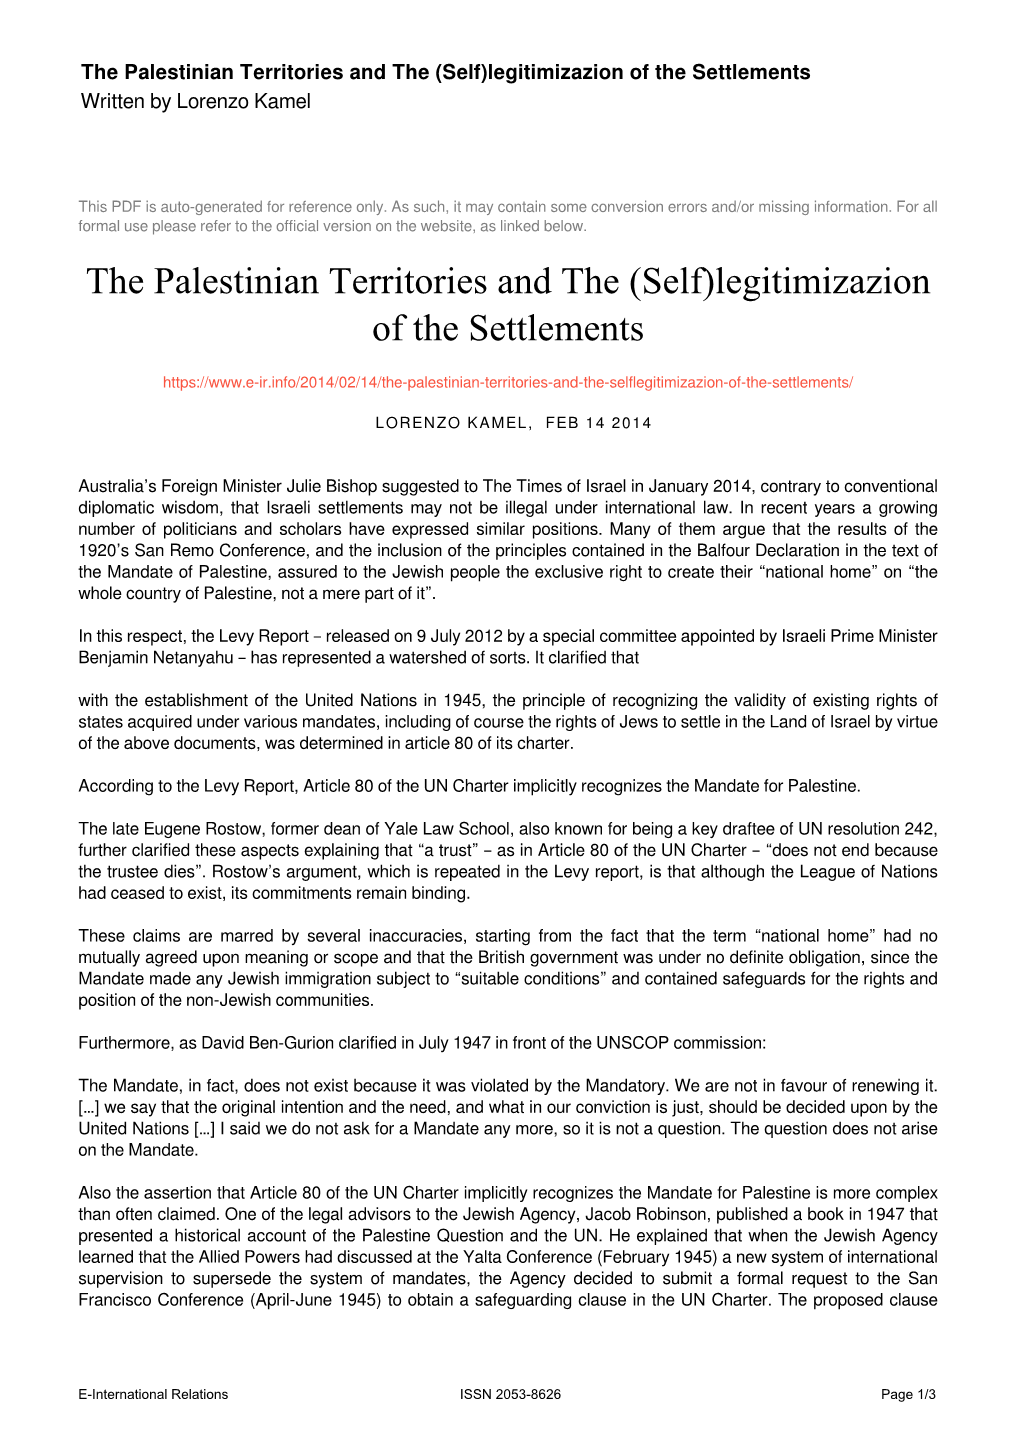 The Palestinian Territories and the (Self)Legitimizazion of the Settlements Written by Lorenzo Kamel